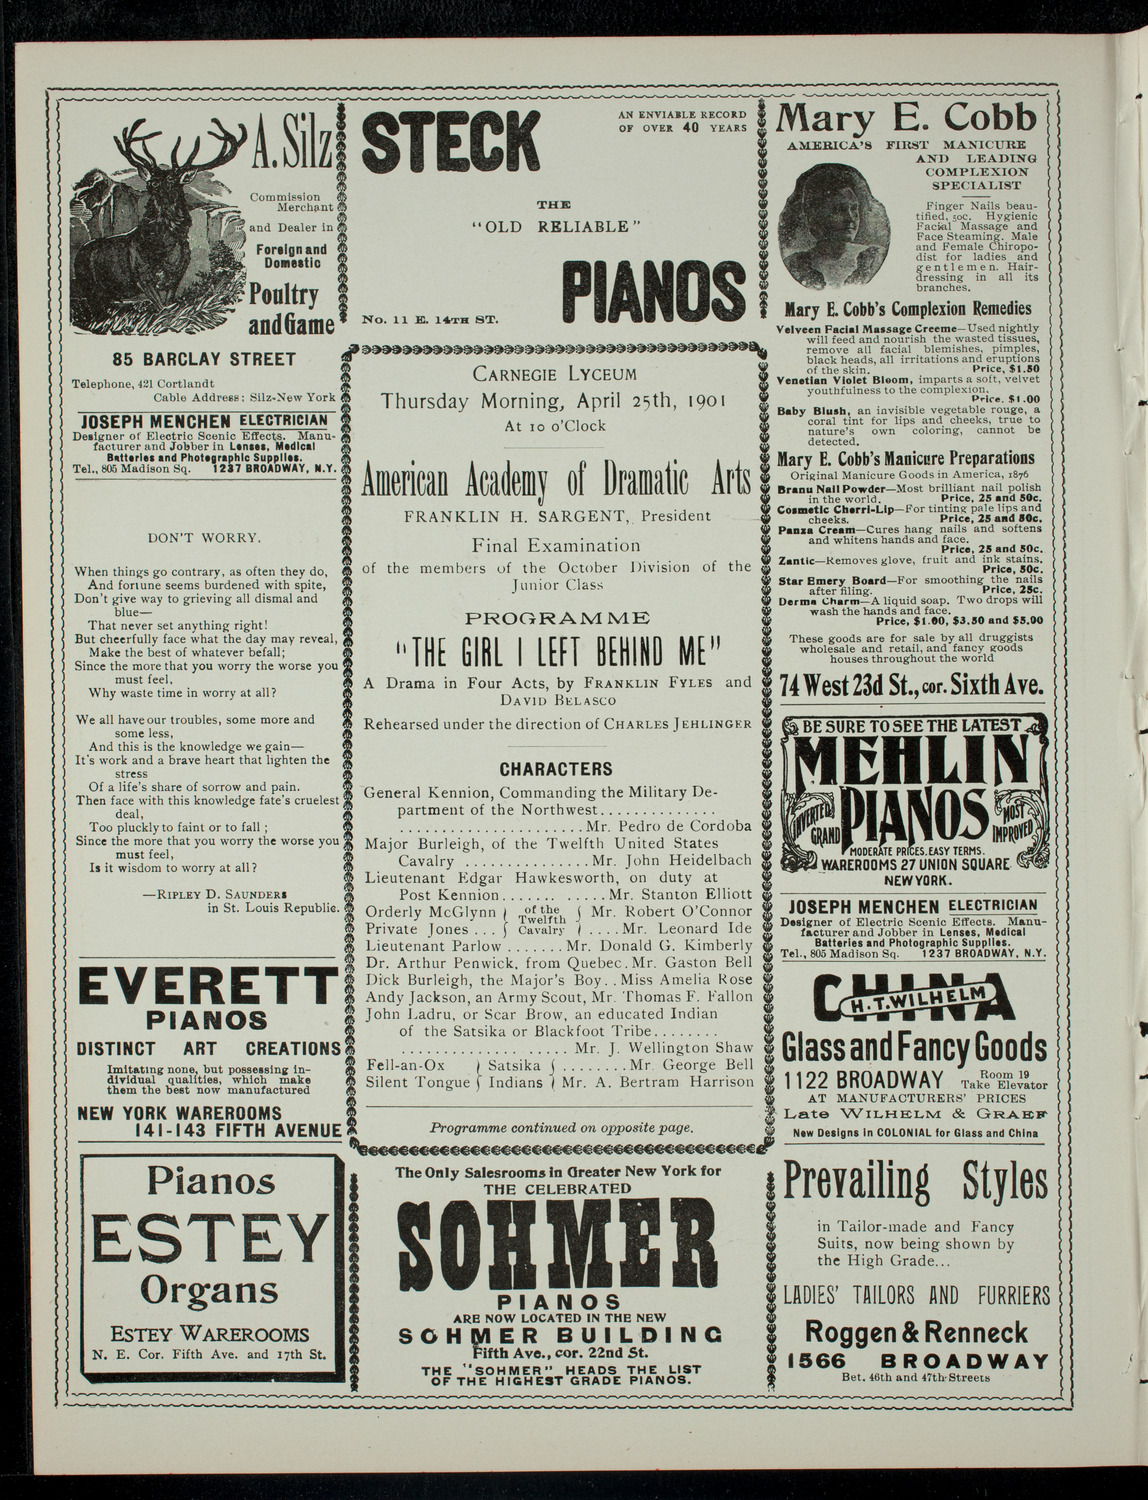 American Academy of Dramatic Arts Final Examination, April 25, 1901, program page 2